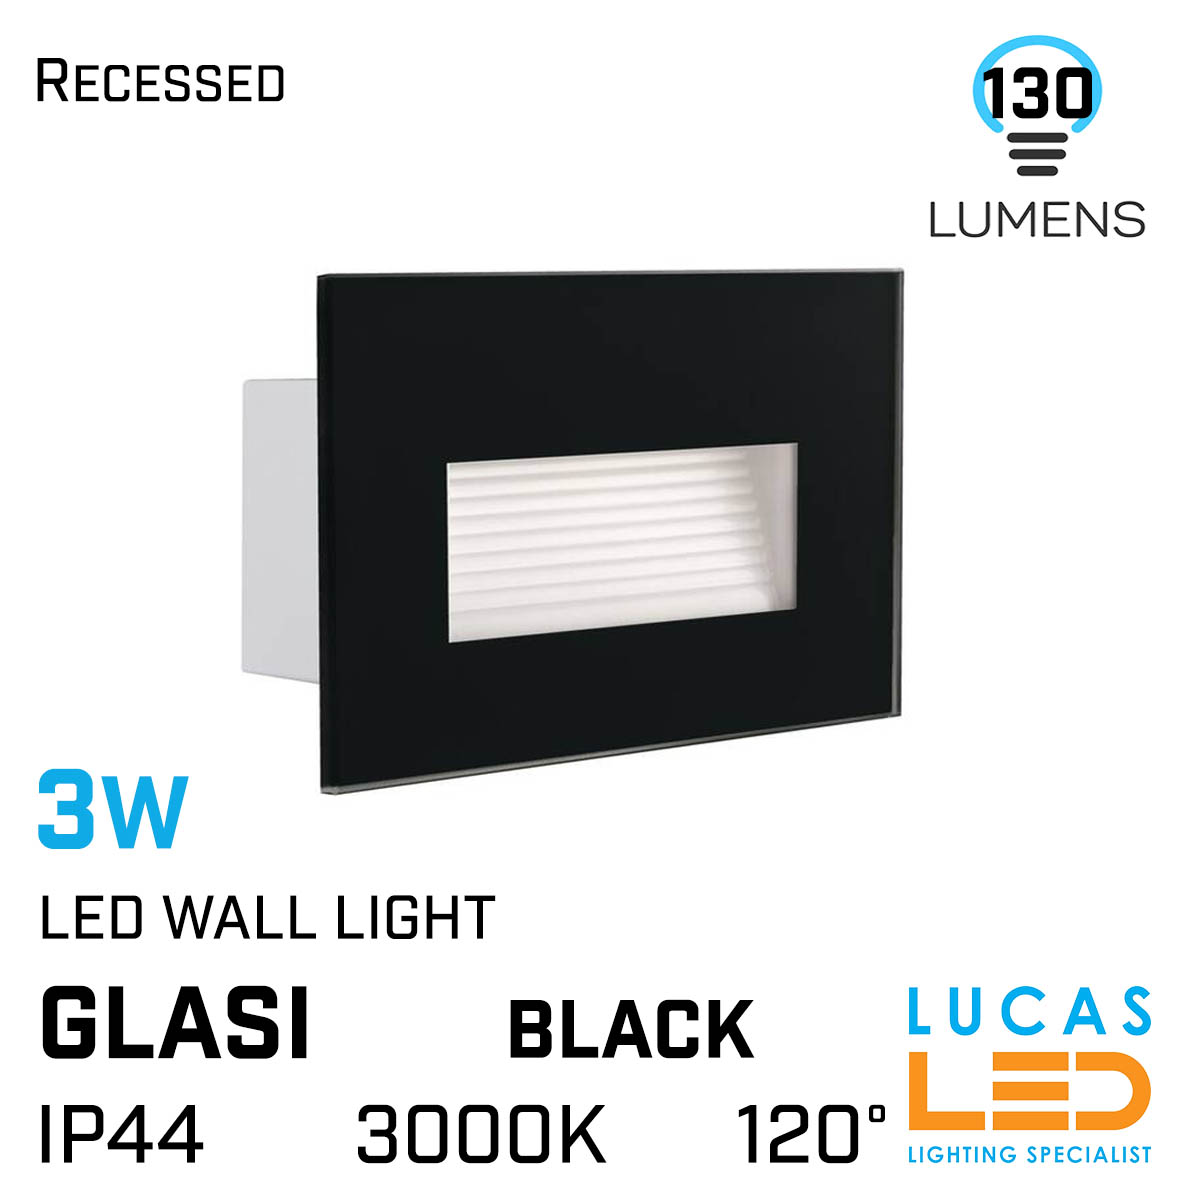 3W Outdoor LED Wall Light - 3000K Warm White - 130lm - GLASI Black body